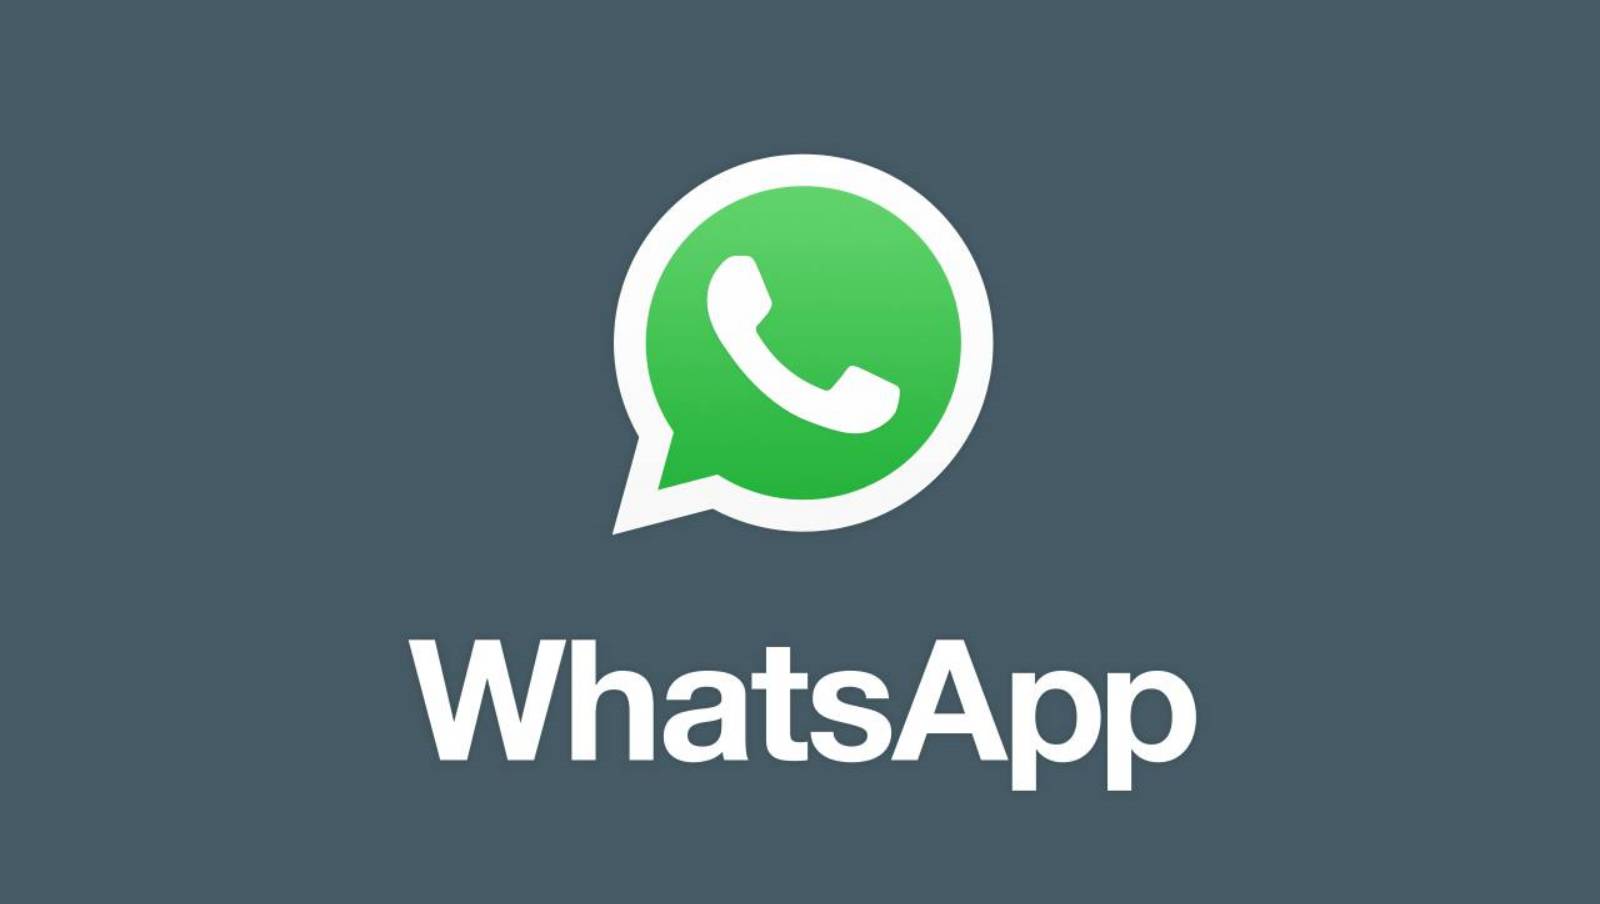 WhatsApp raderad